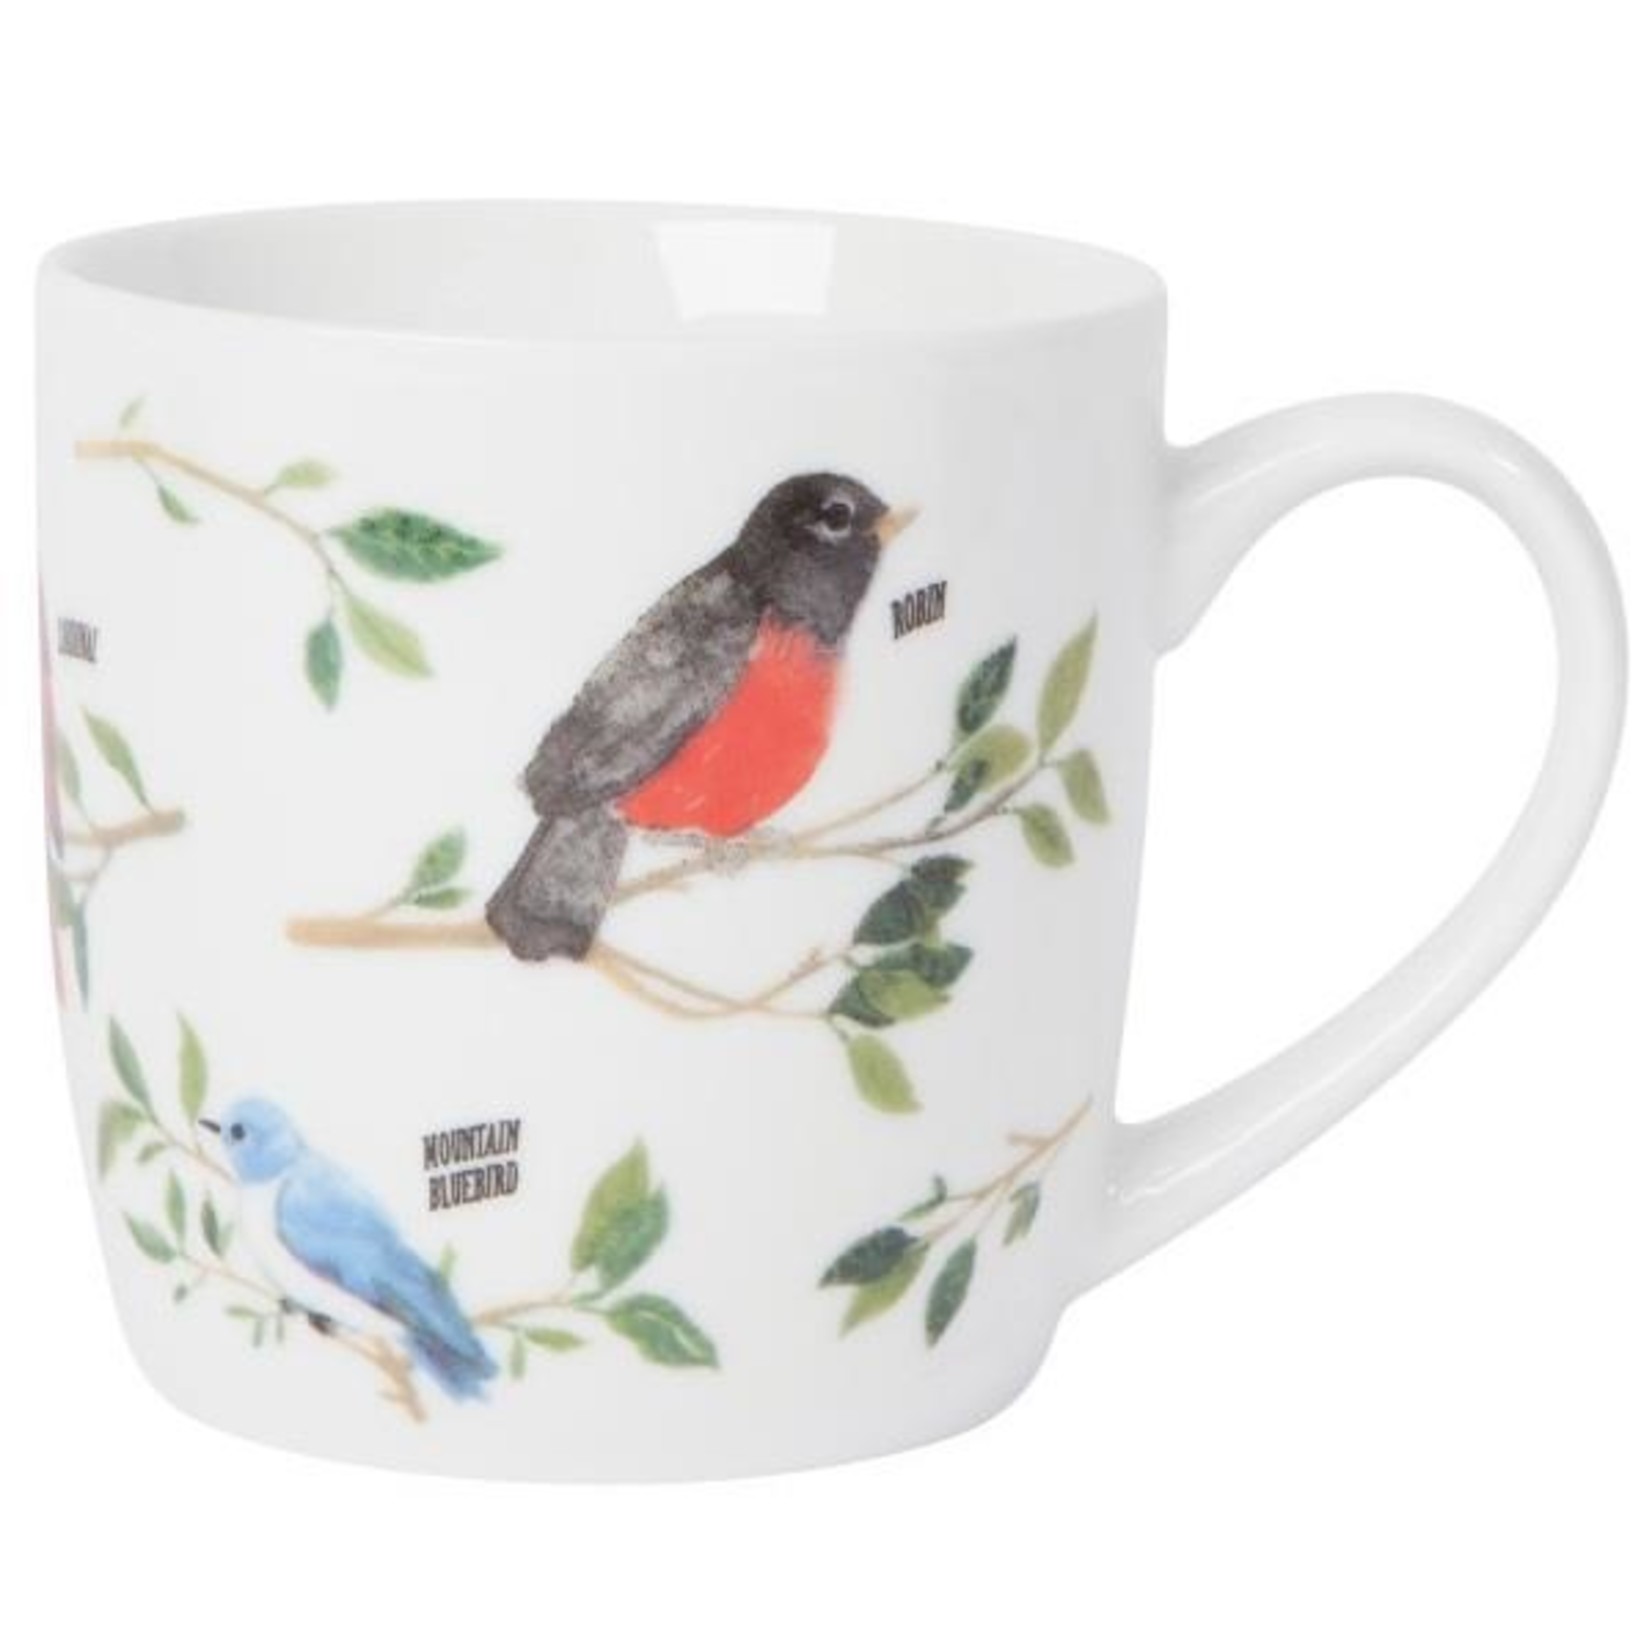 Birdsong Mug